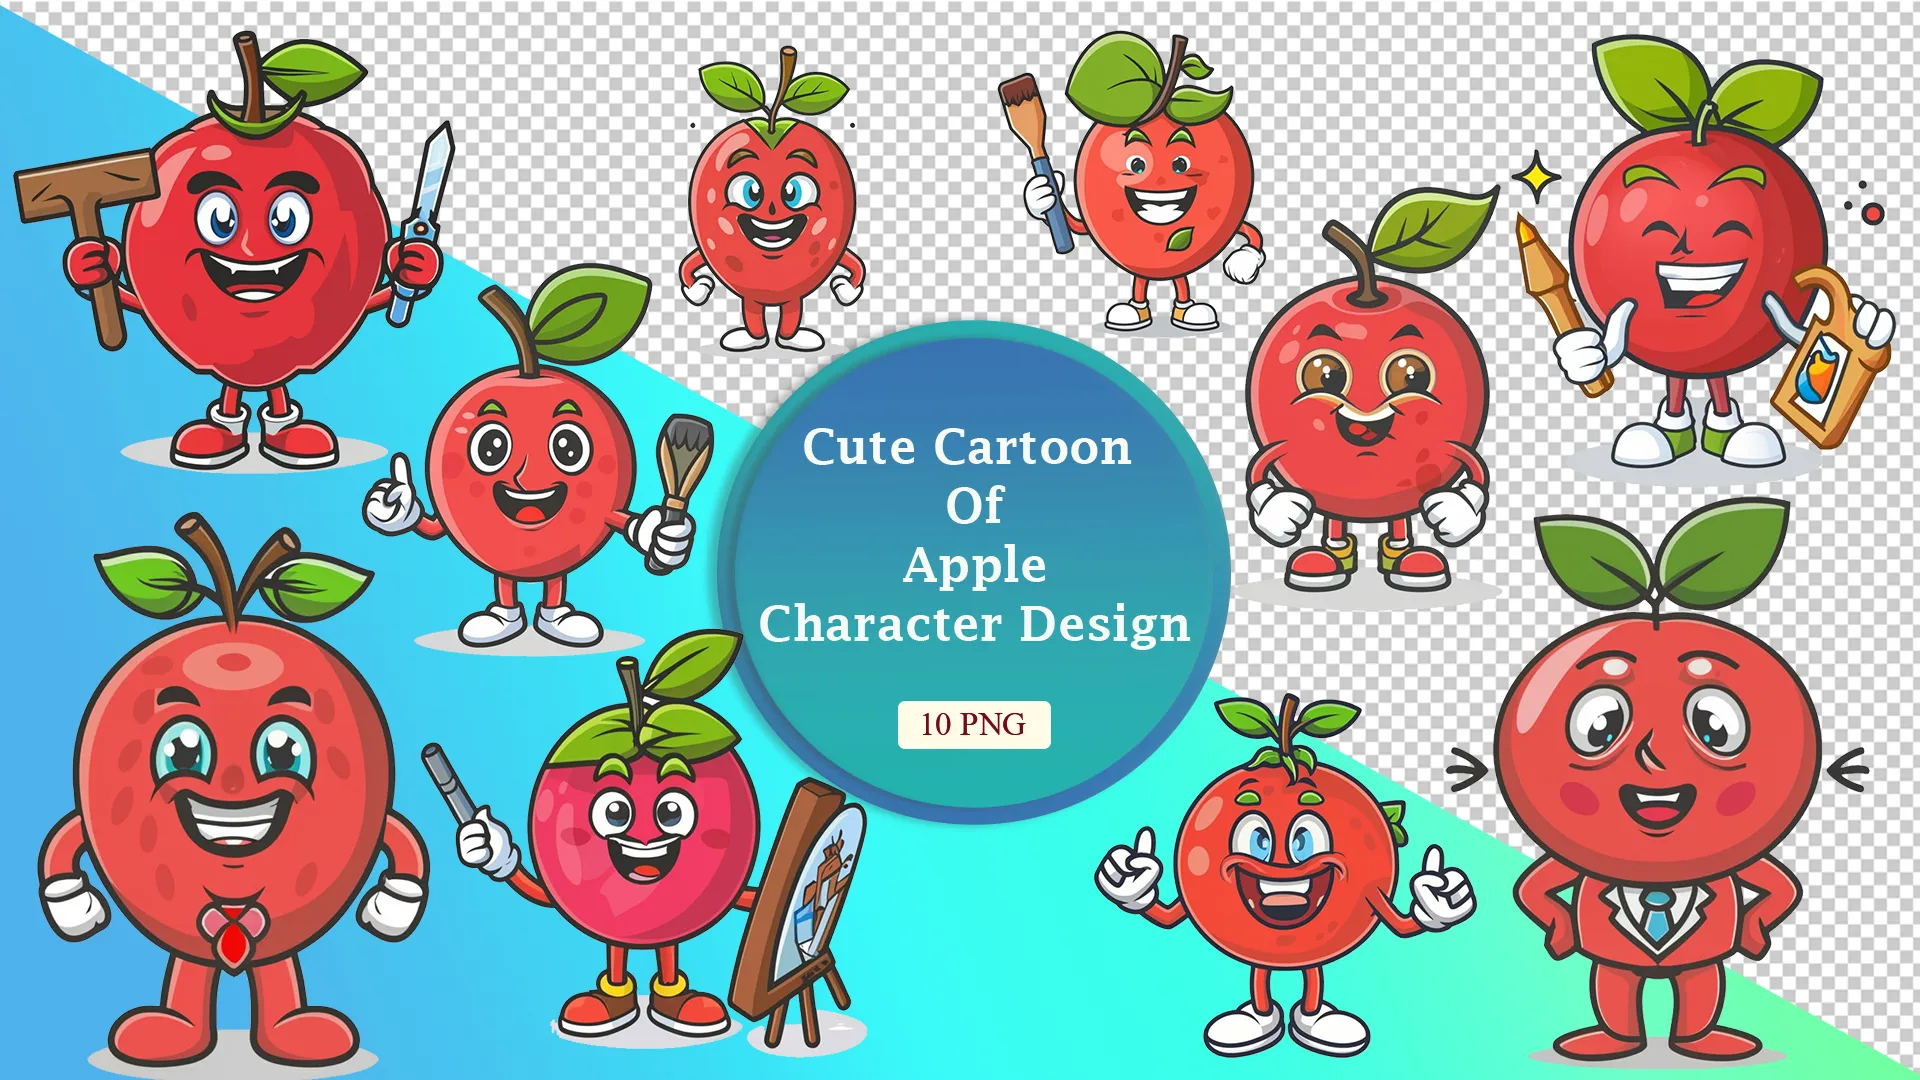 Creative Apple Cartoon PNG Pack image